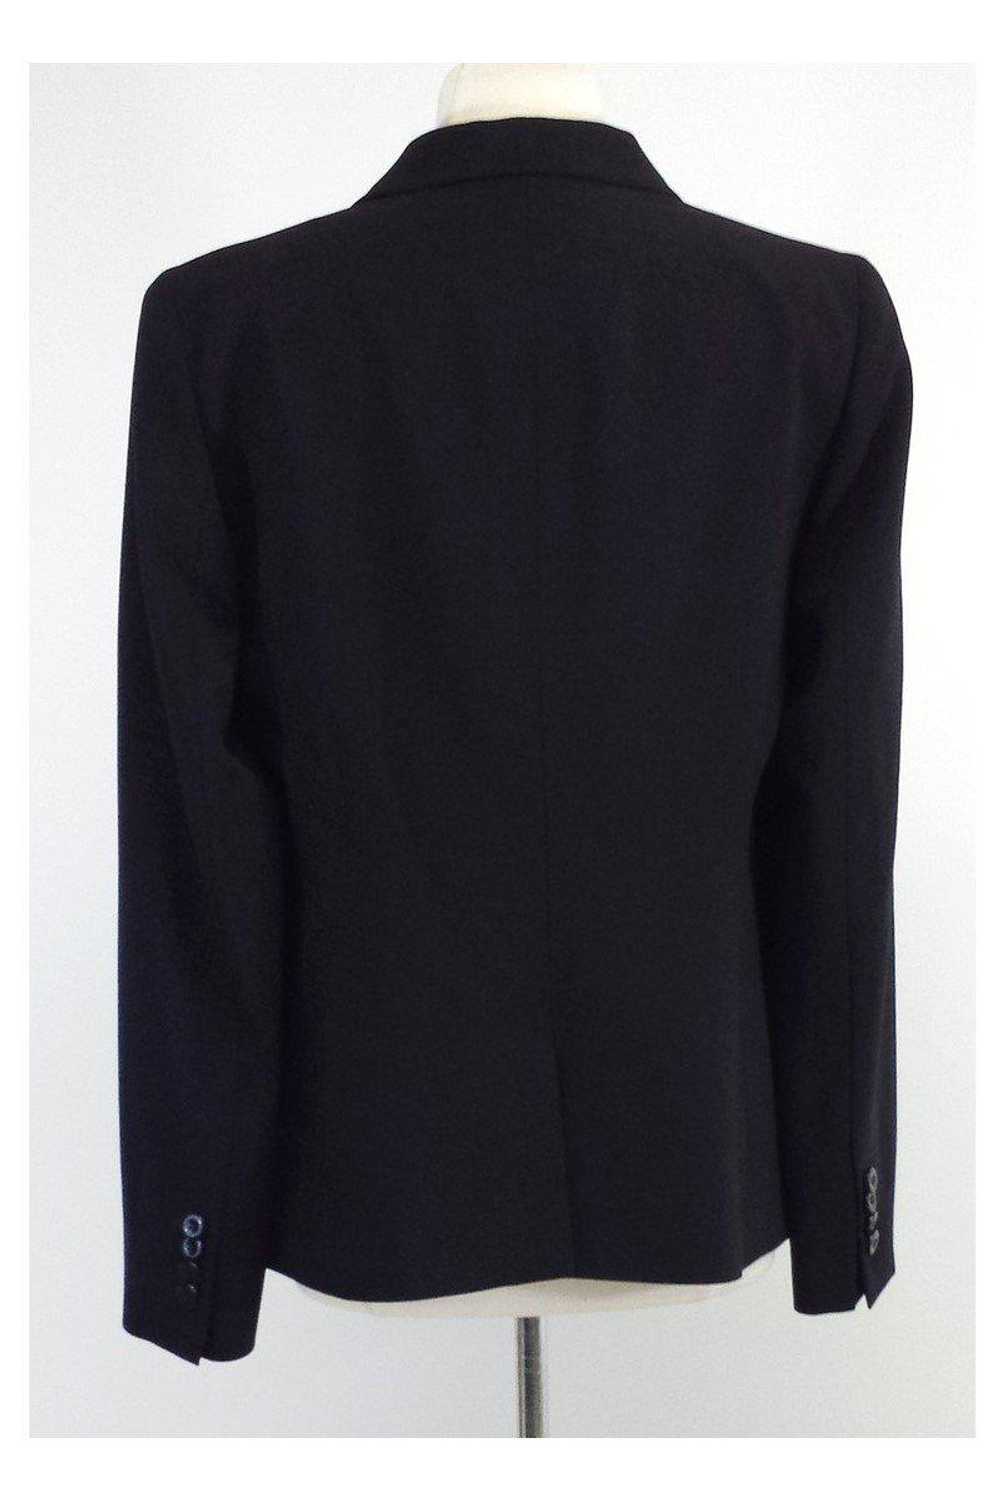 Armani Collezioni - Black Wool Blazer Sz 12 - image 3